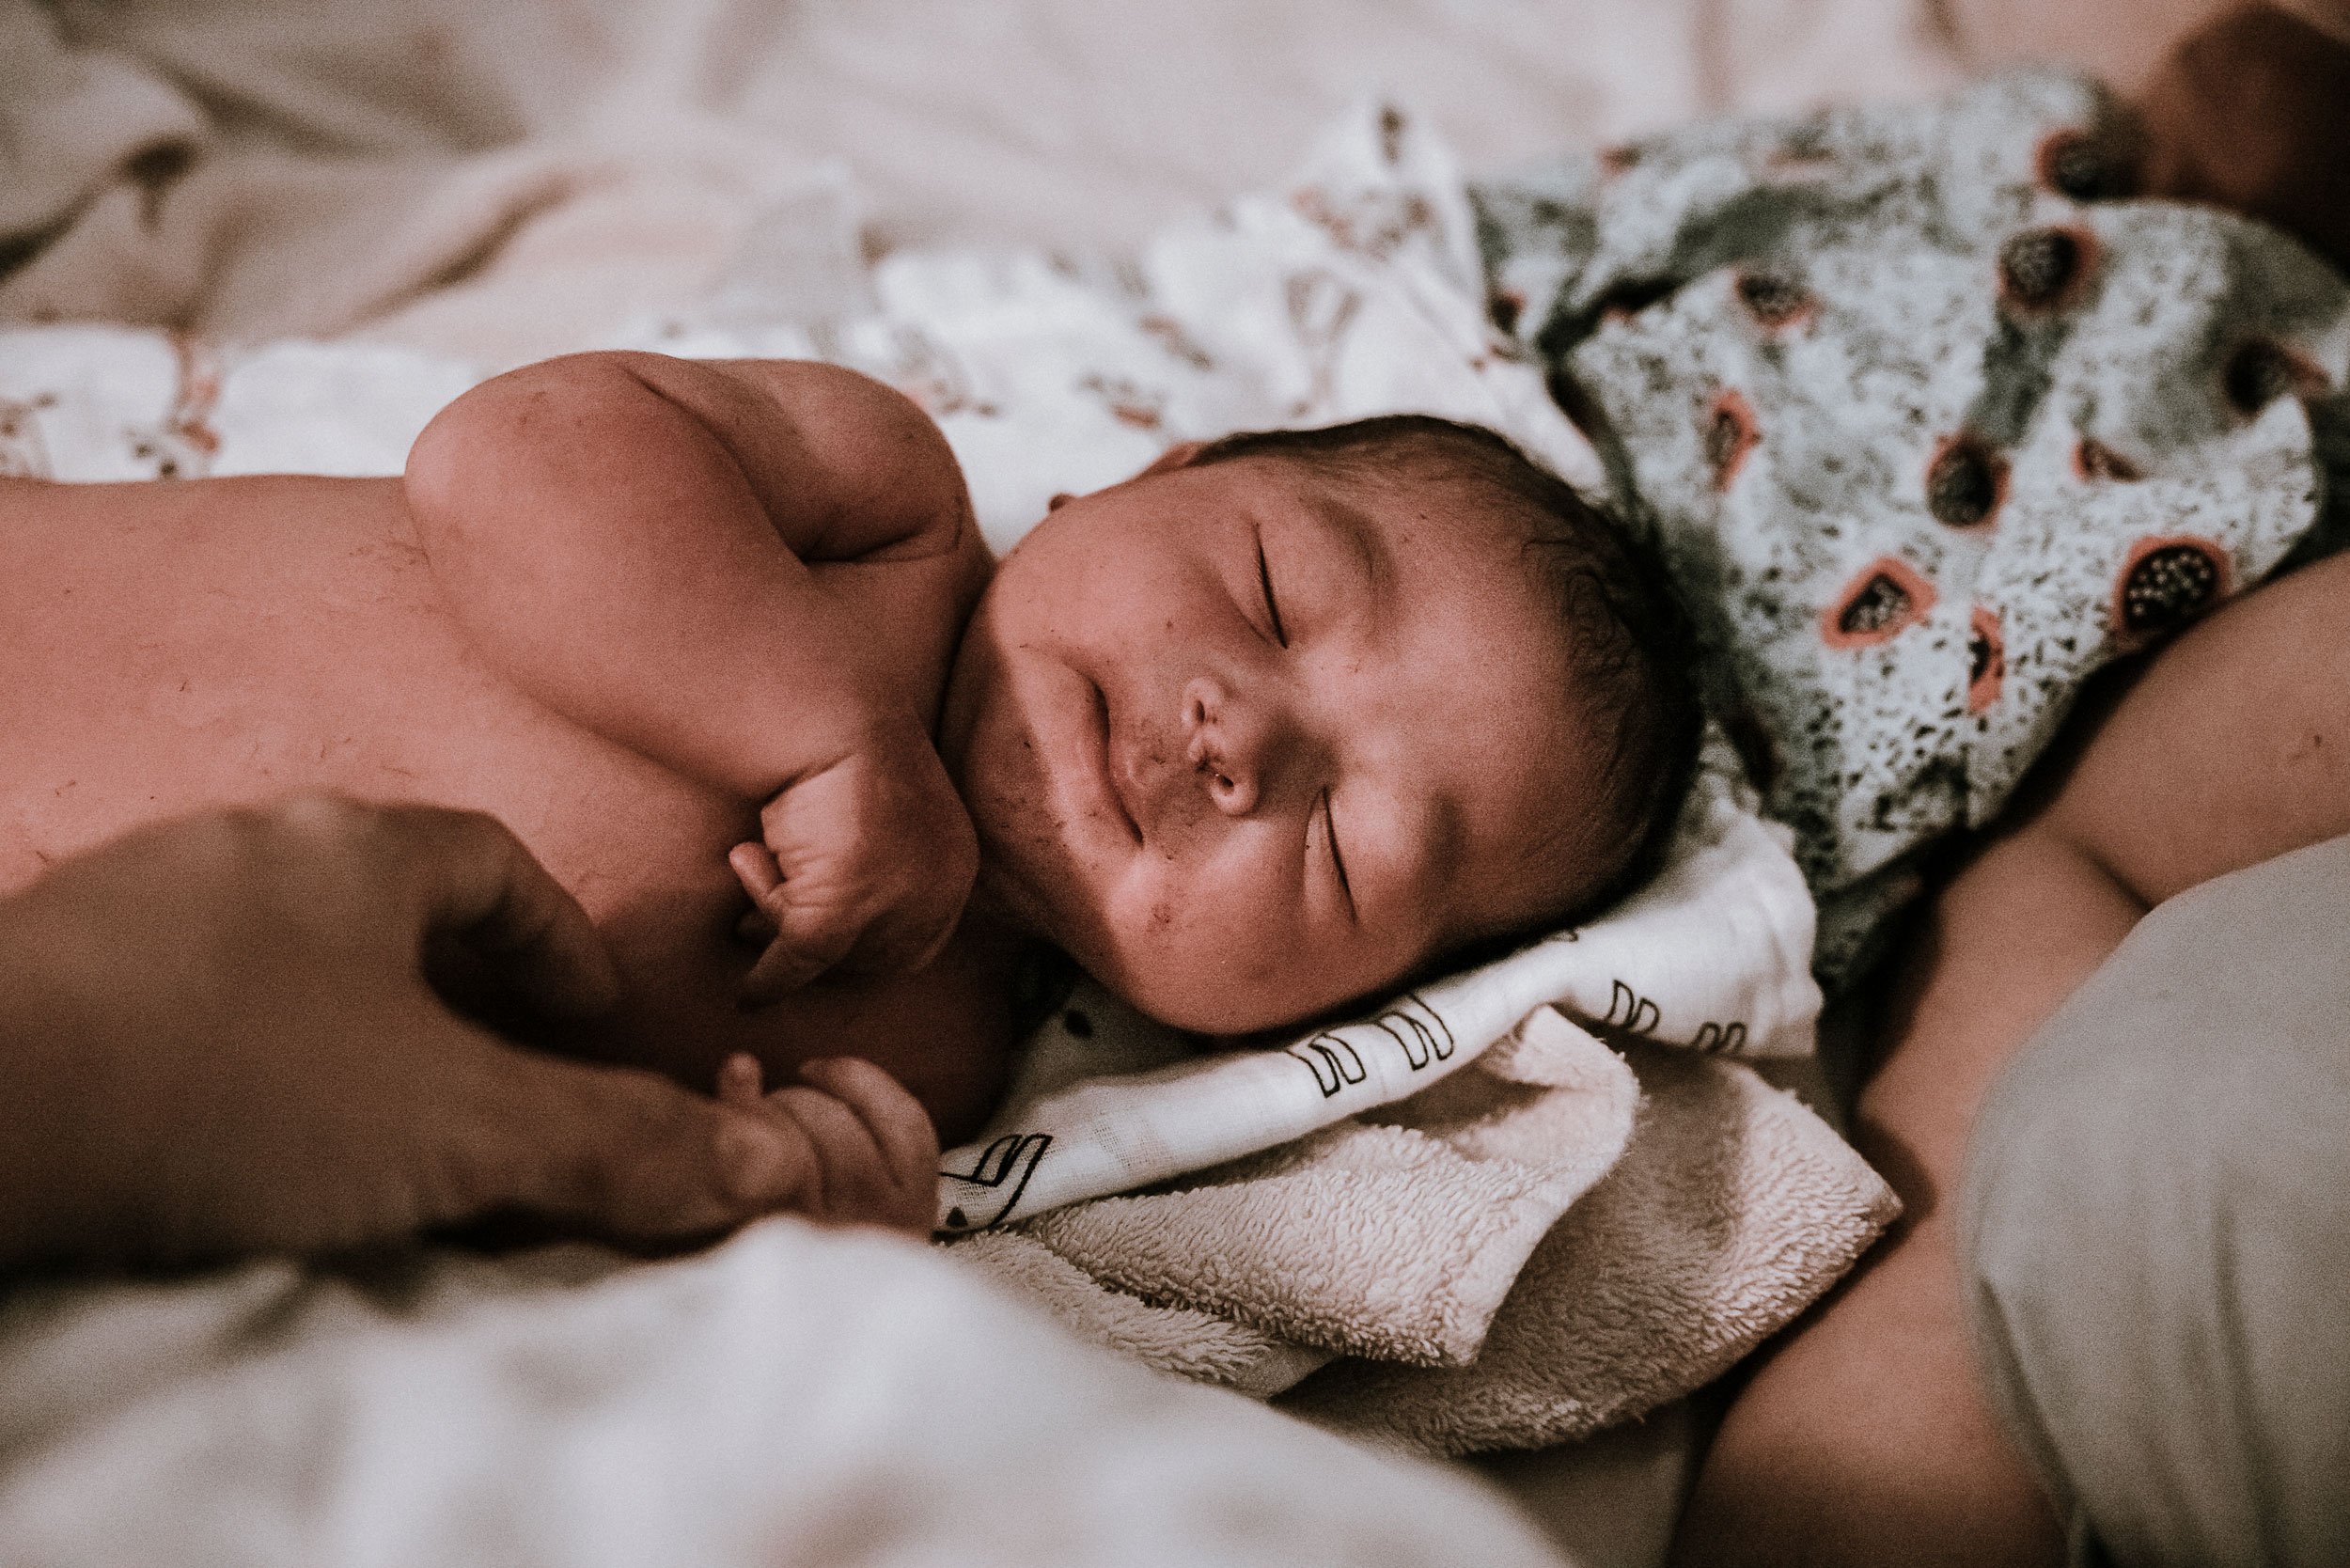 hawaii-birth-photographer-oahu-home-birth-midwife-selena-green-21.jpg